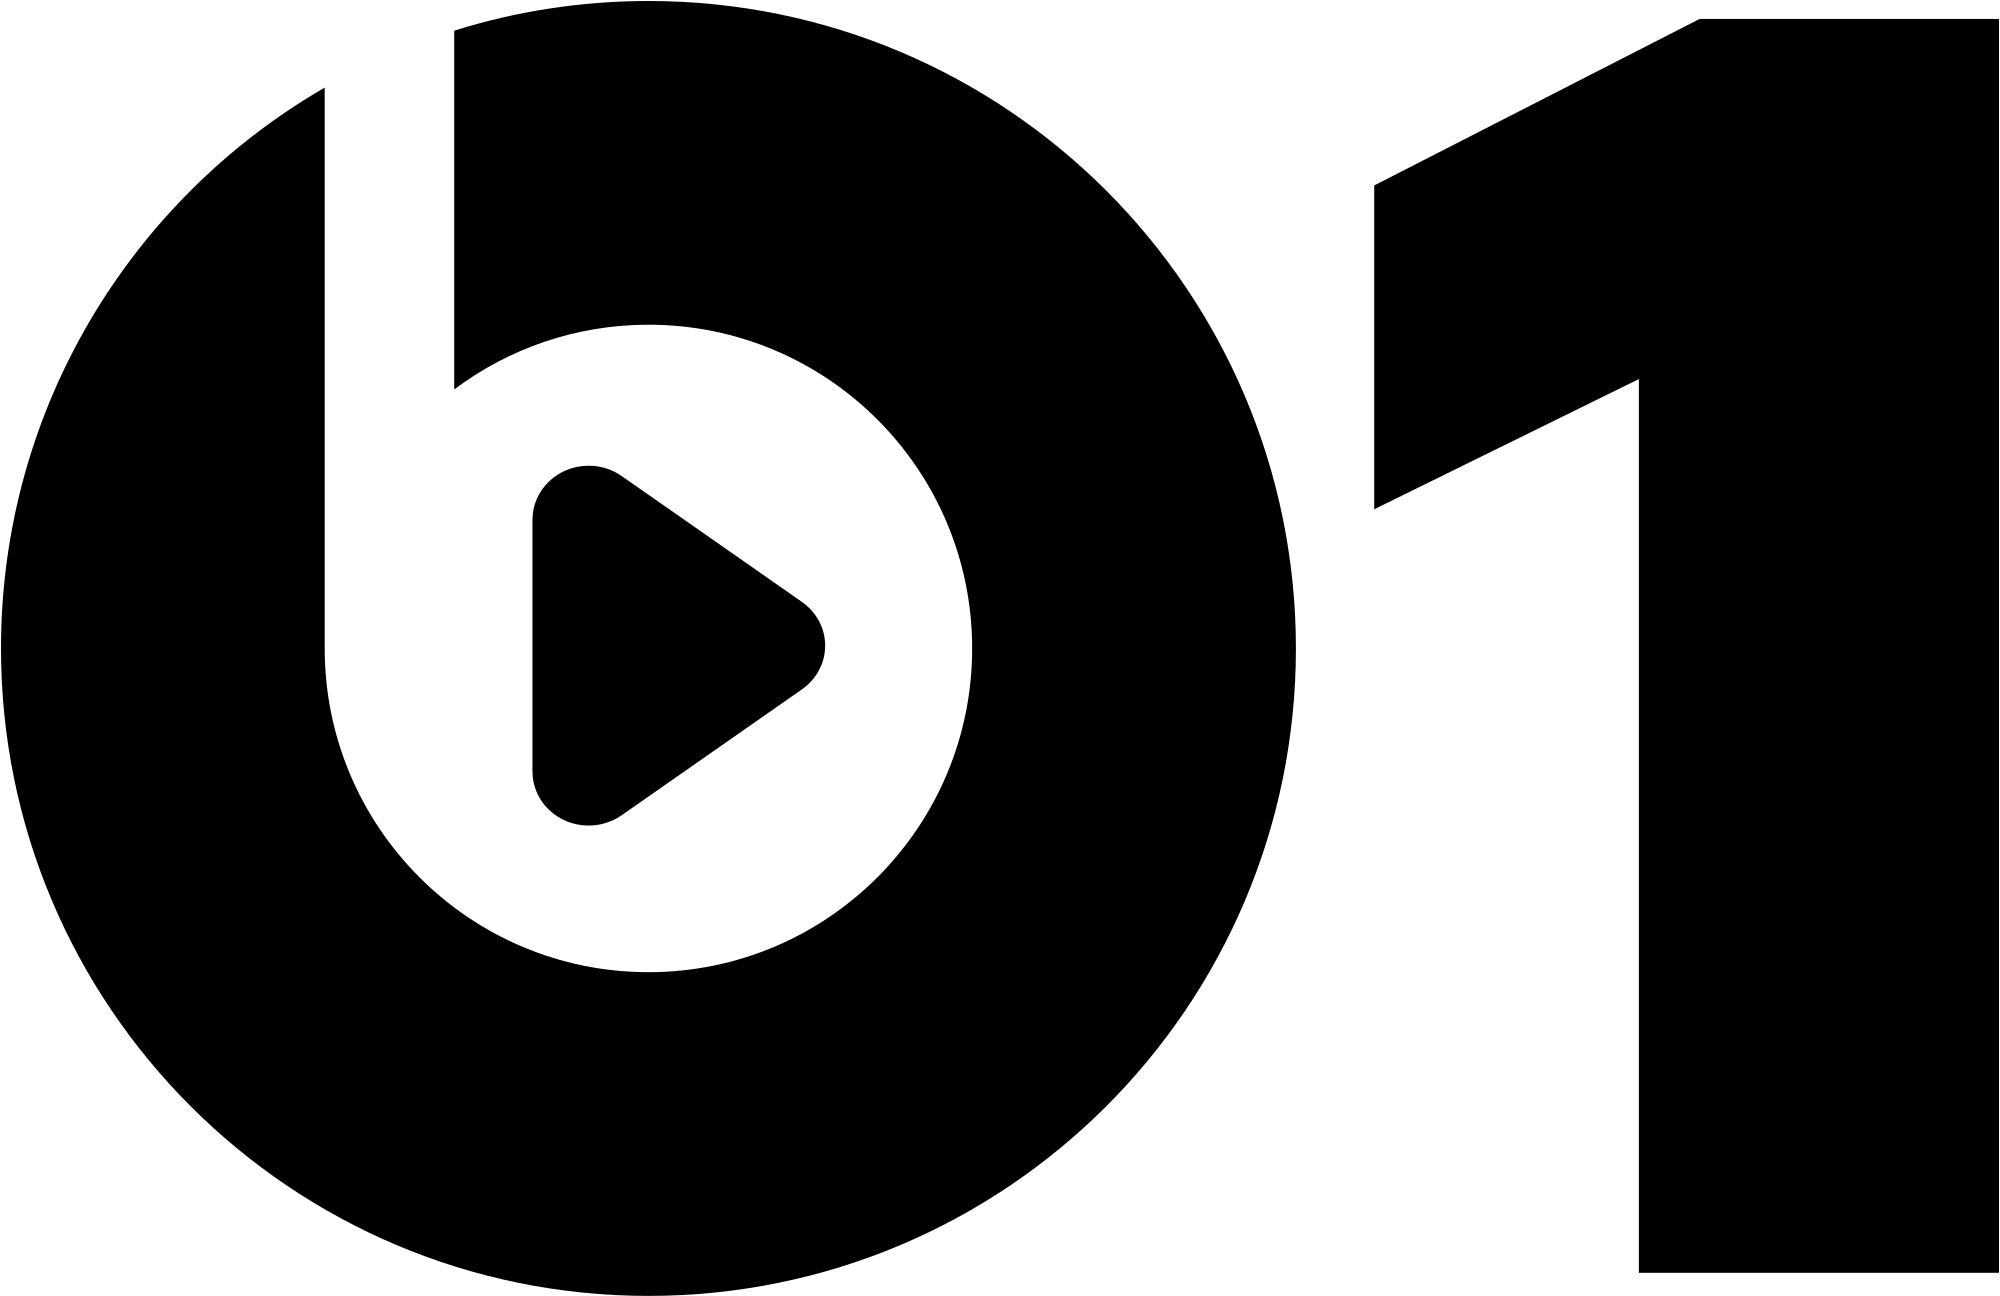 Black Beats by Dre Logo - Black Beats Logo Png Image